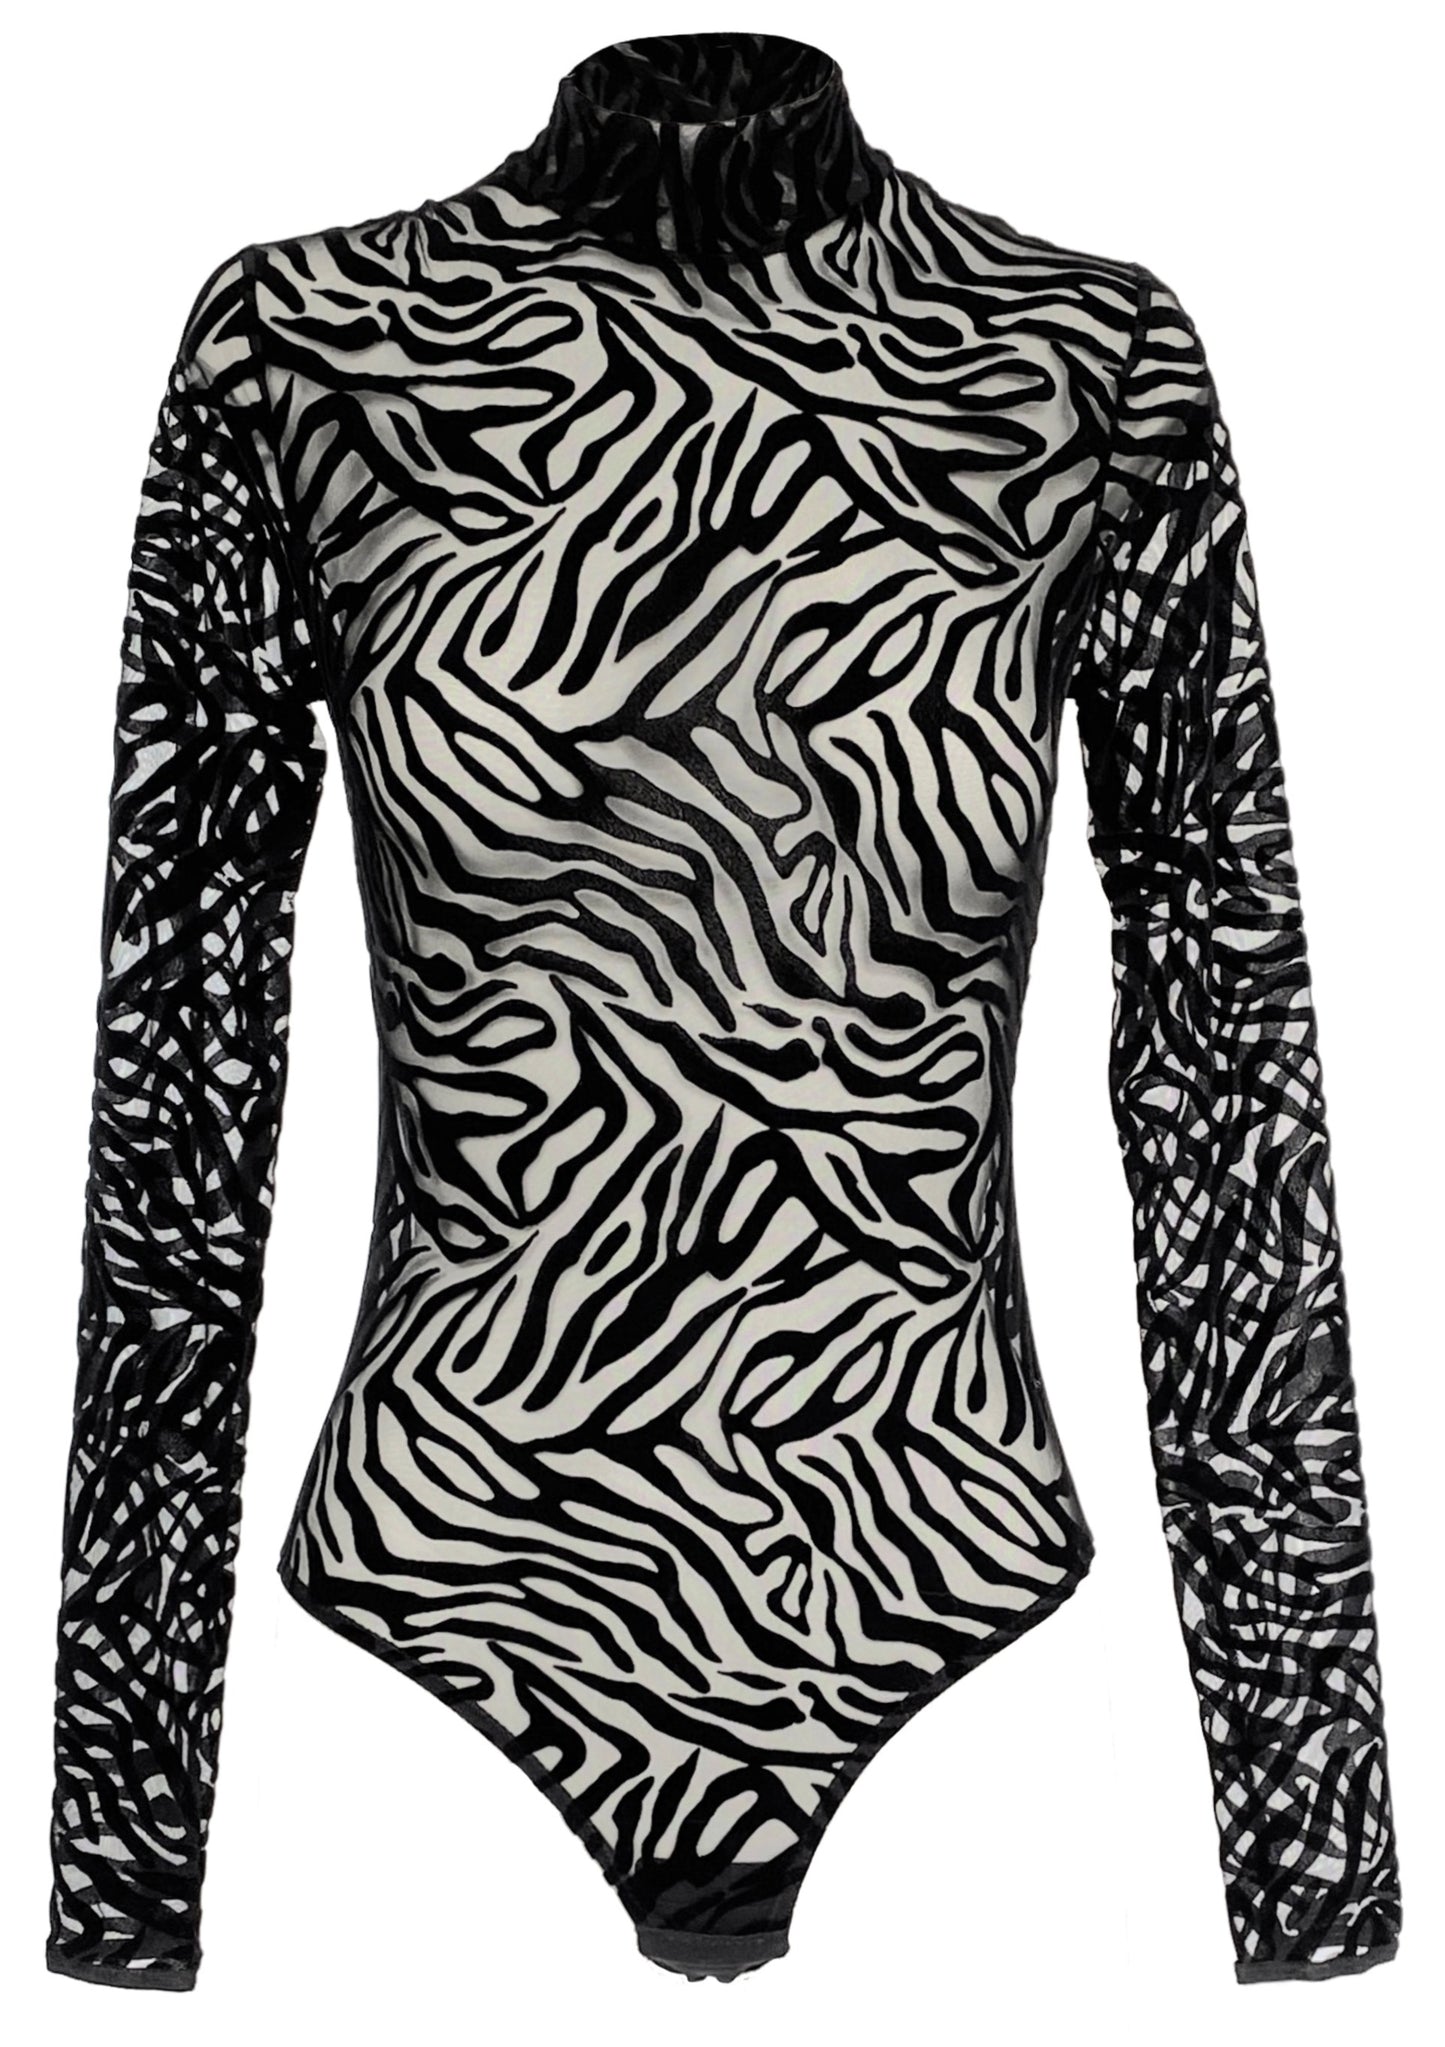 Zebra print long sleeve bodysuit